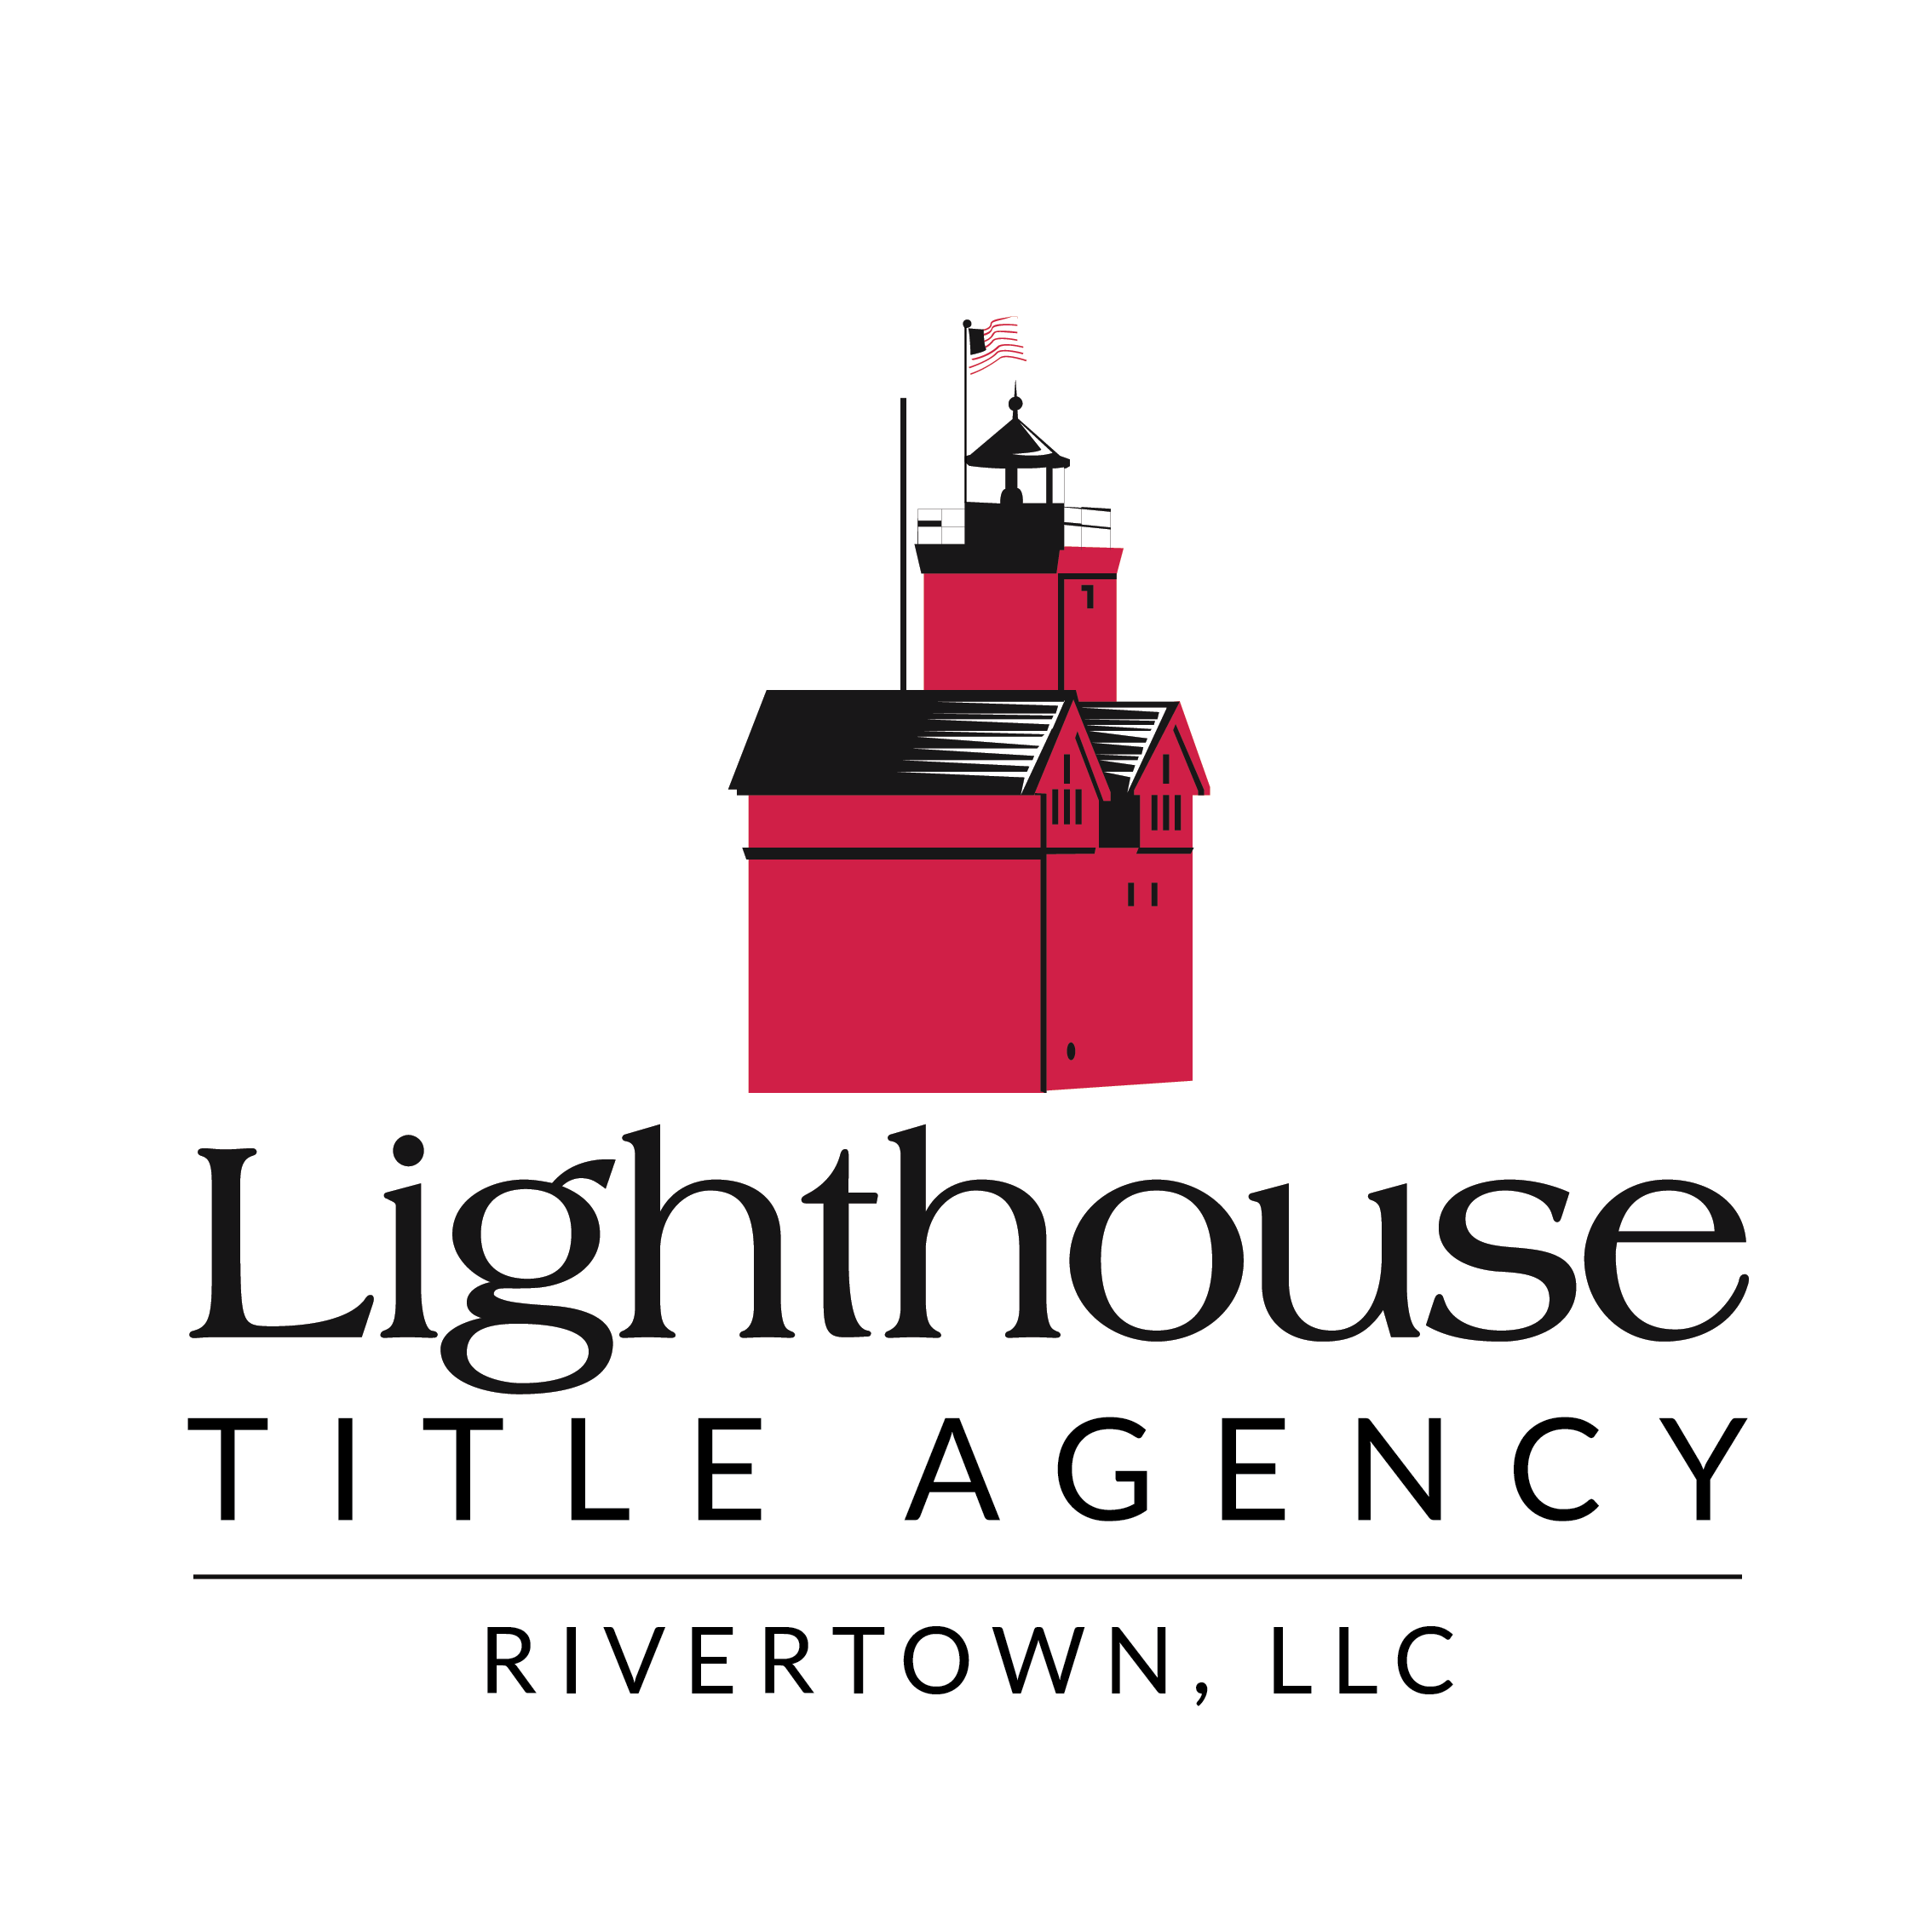 Lighthouse Title Agency - Rivertown, LLC